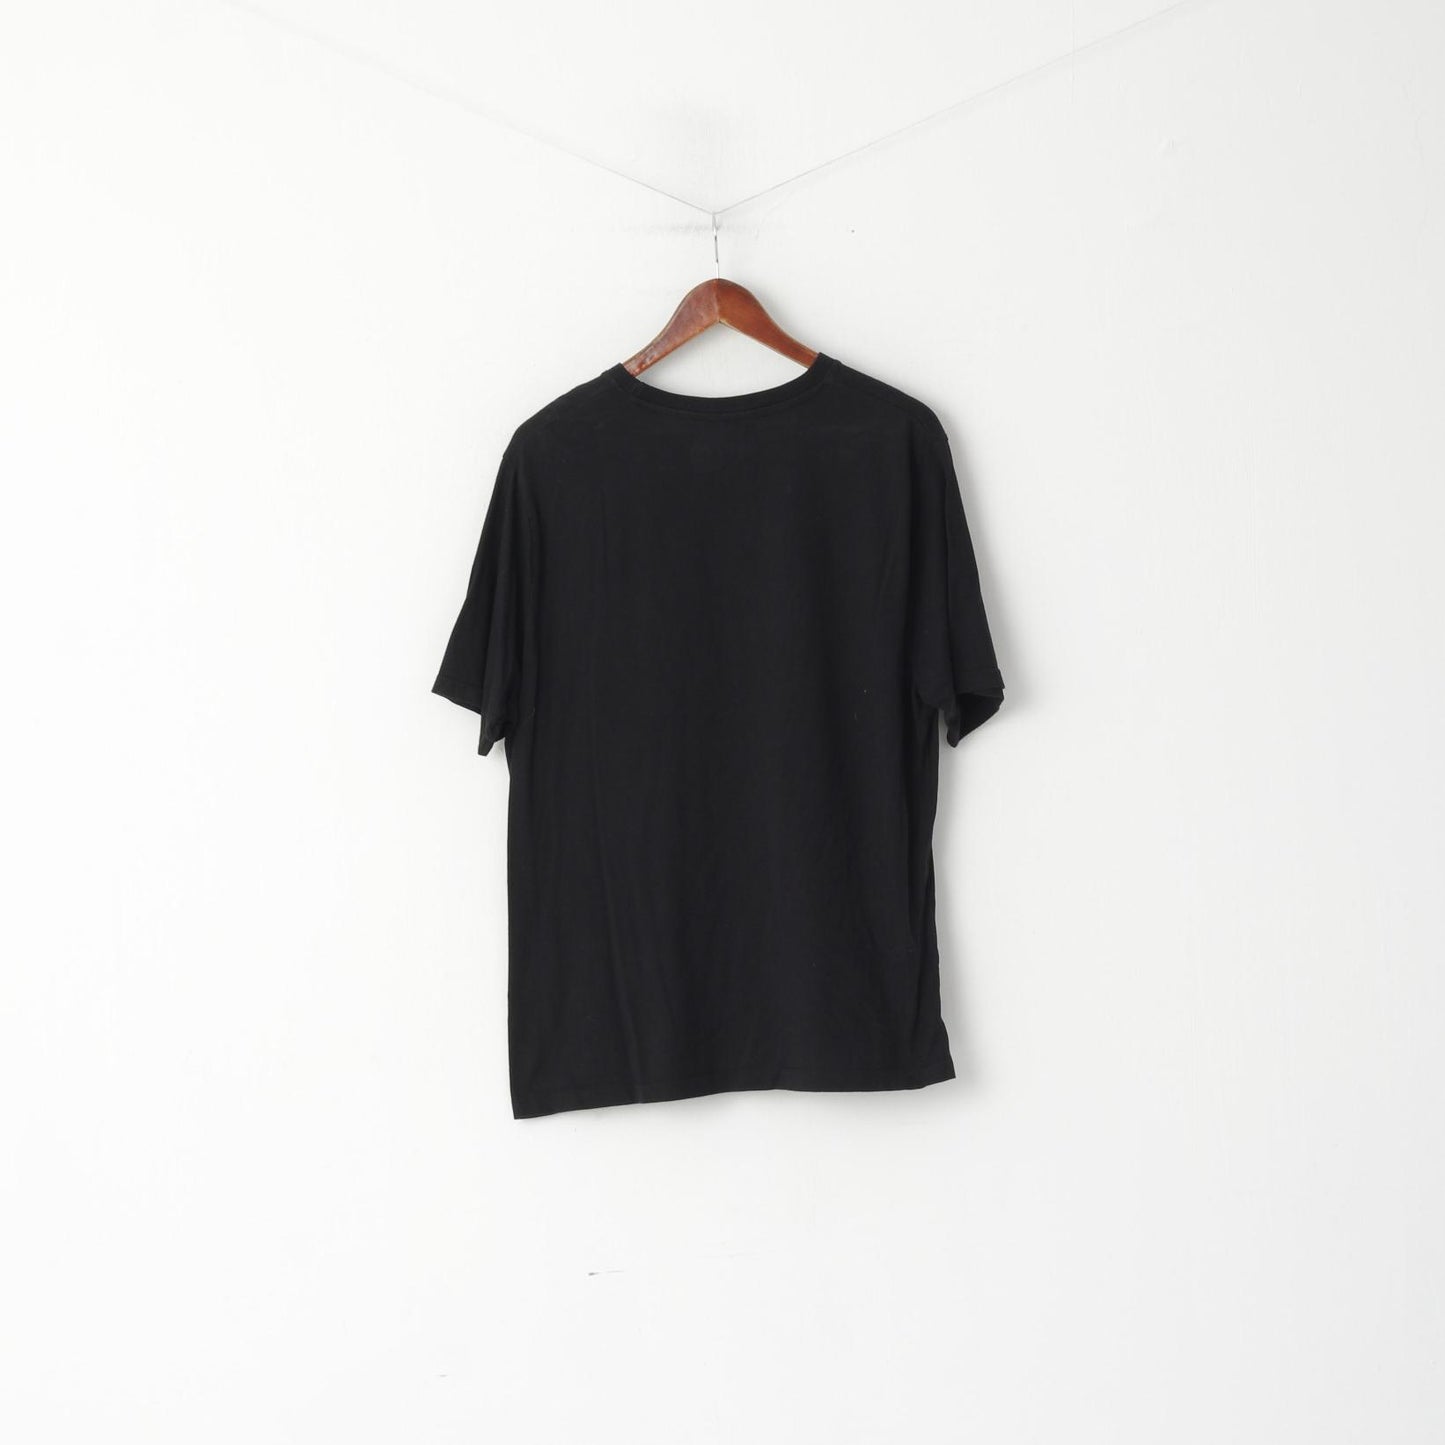 Twisted Gorilla Men XL T- Shirt Black Cotton Black Skate Skull Graphic Top